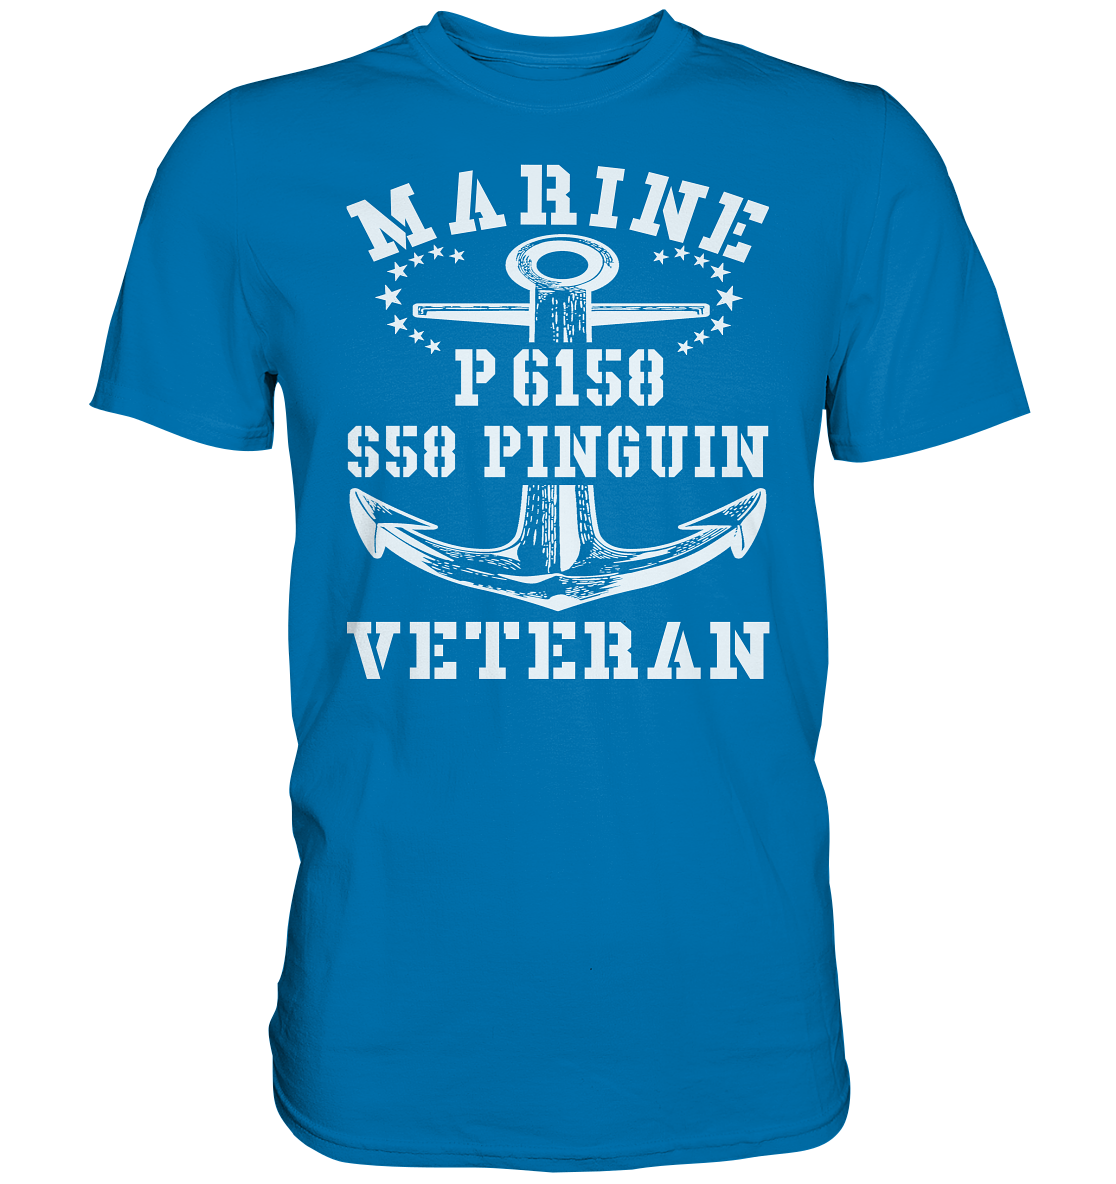 P6158 S58 PINGUIN Marine Veteran - Premium Shirt